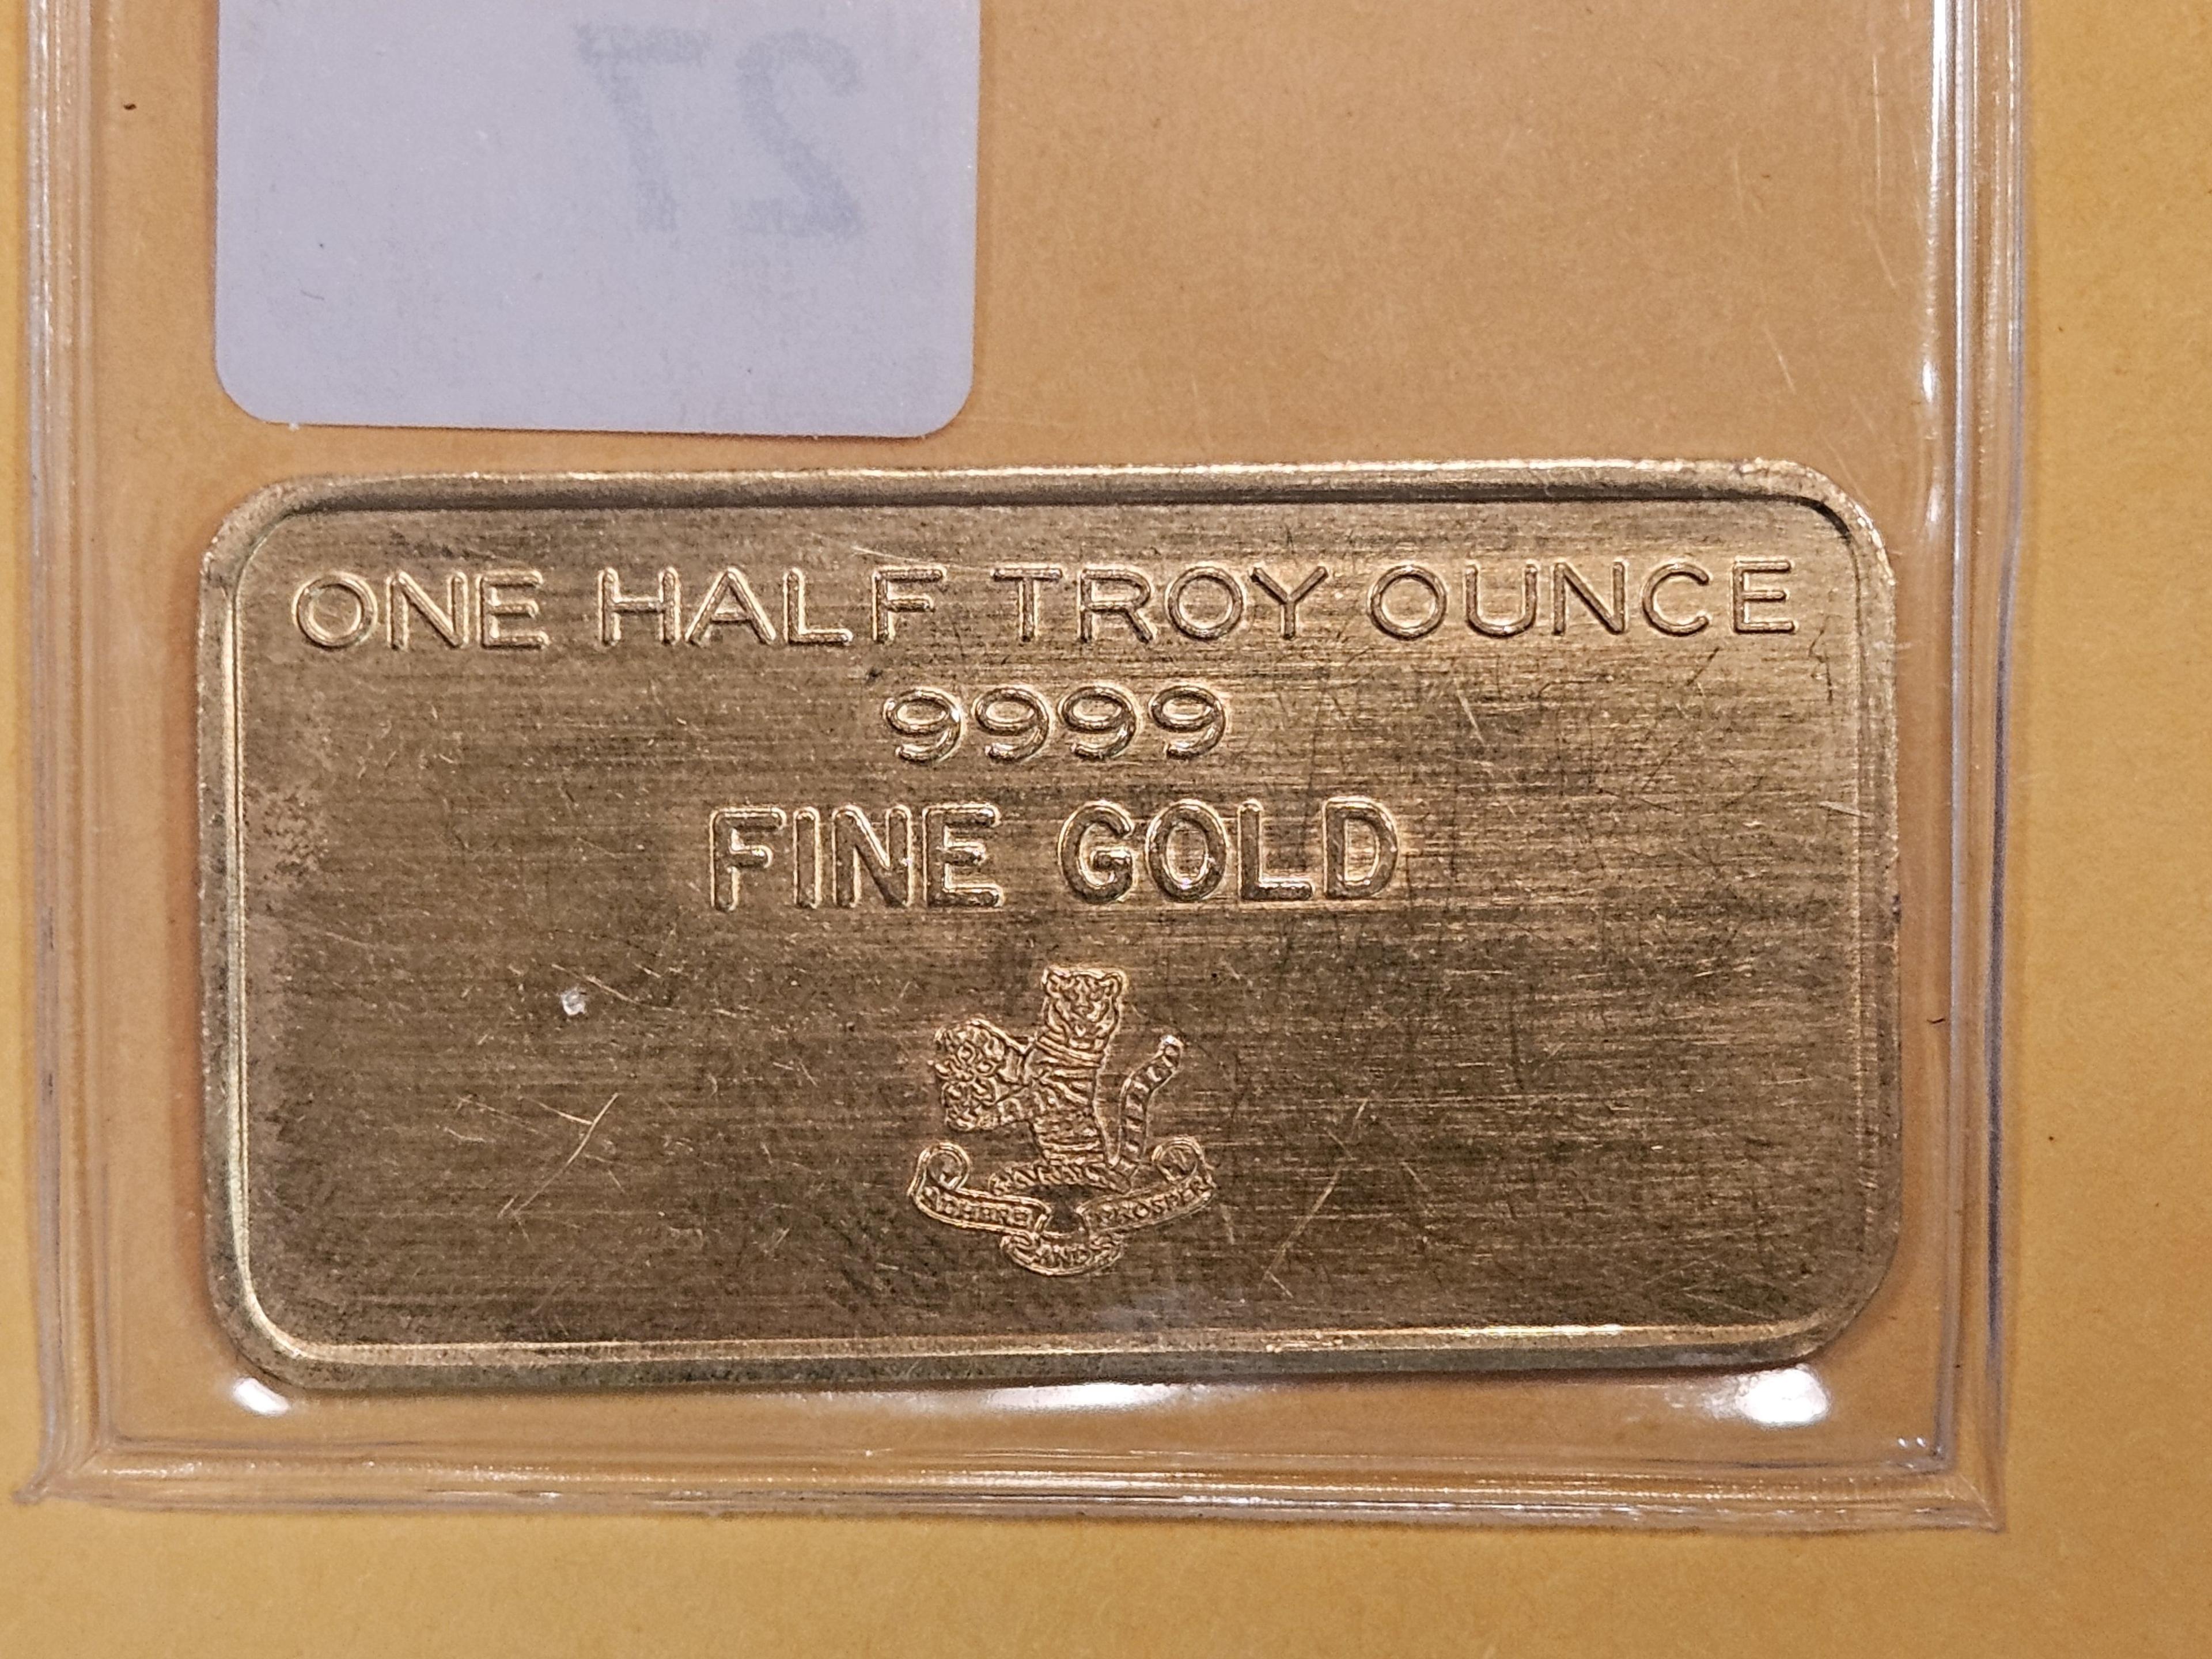 OLD GOLD BAR! One Half Troy ounce .9999 fine gold bar